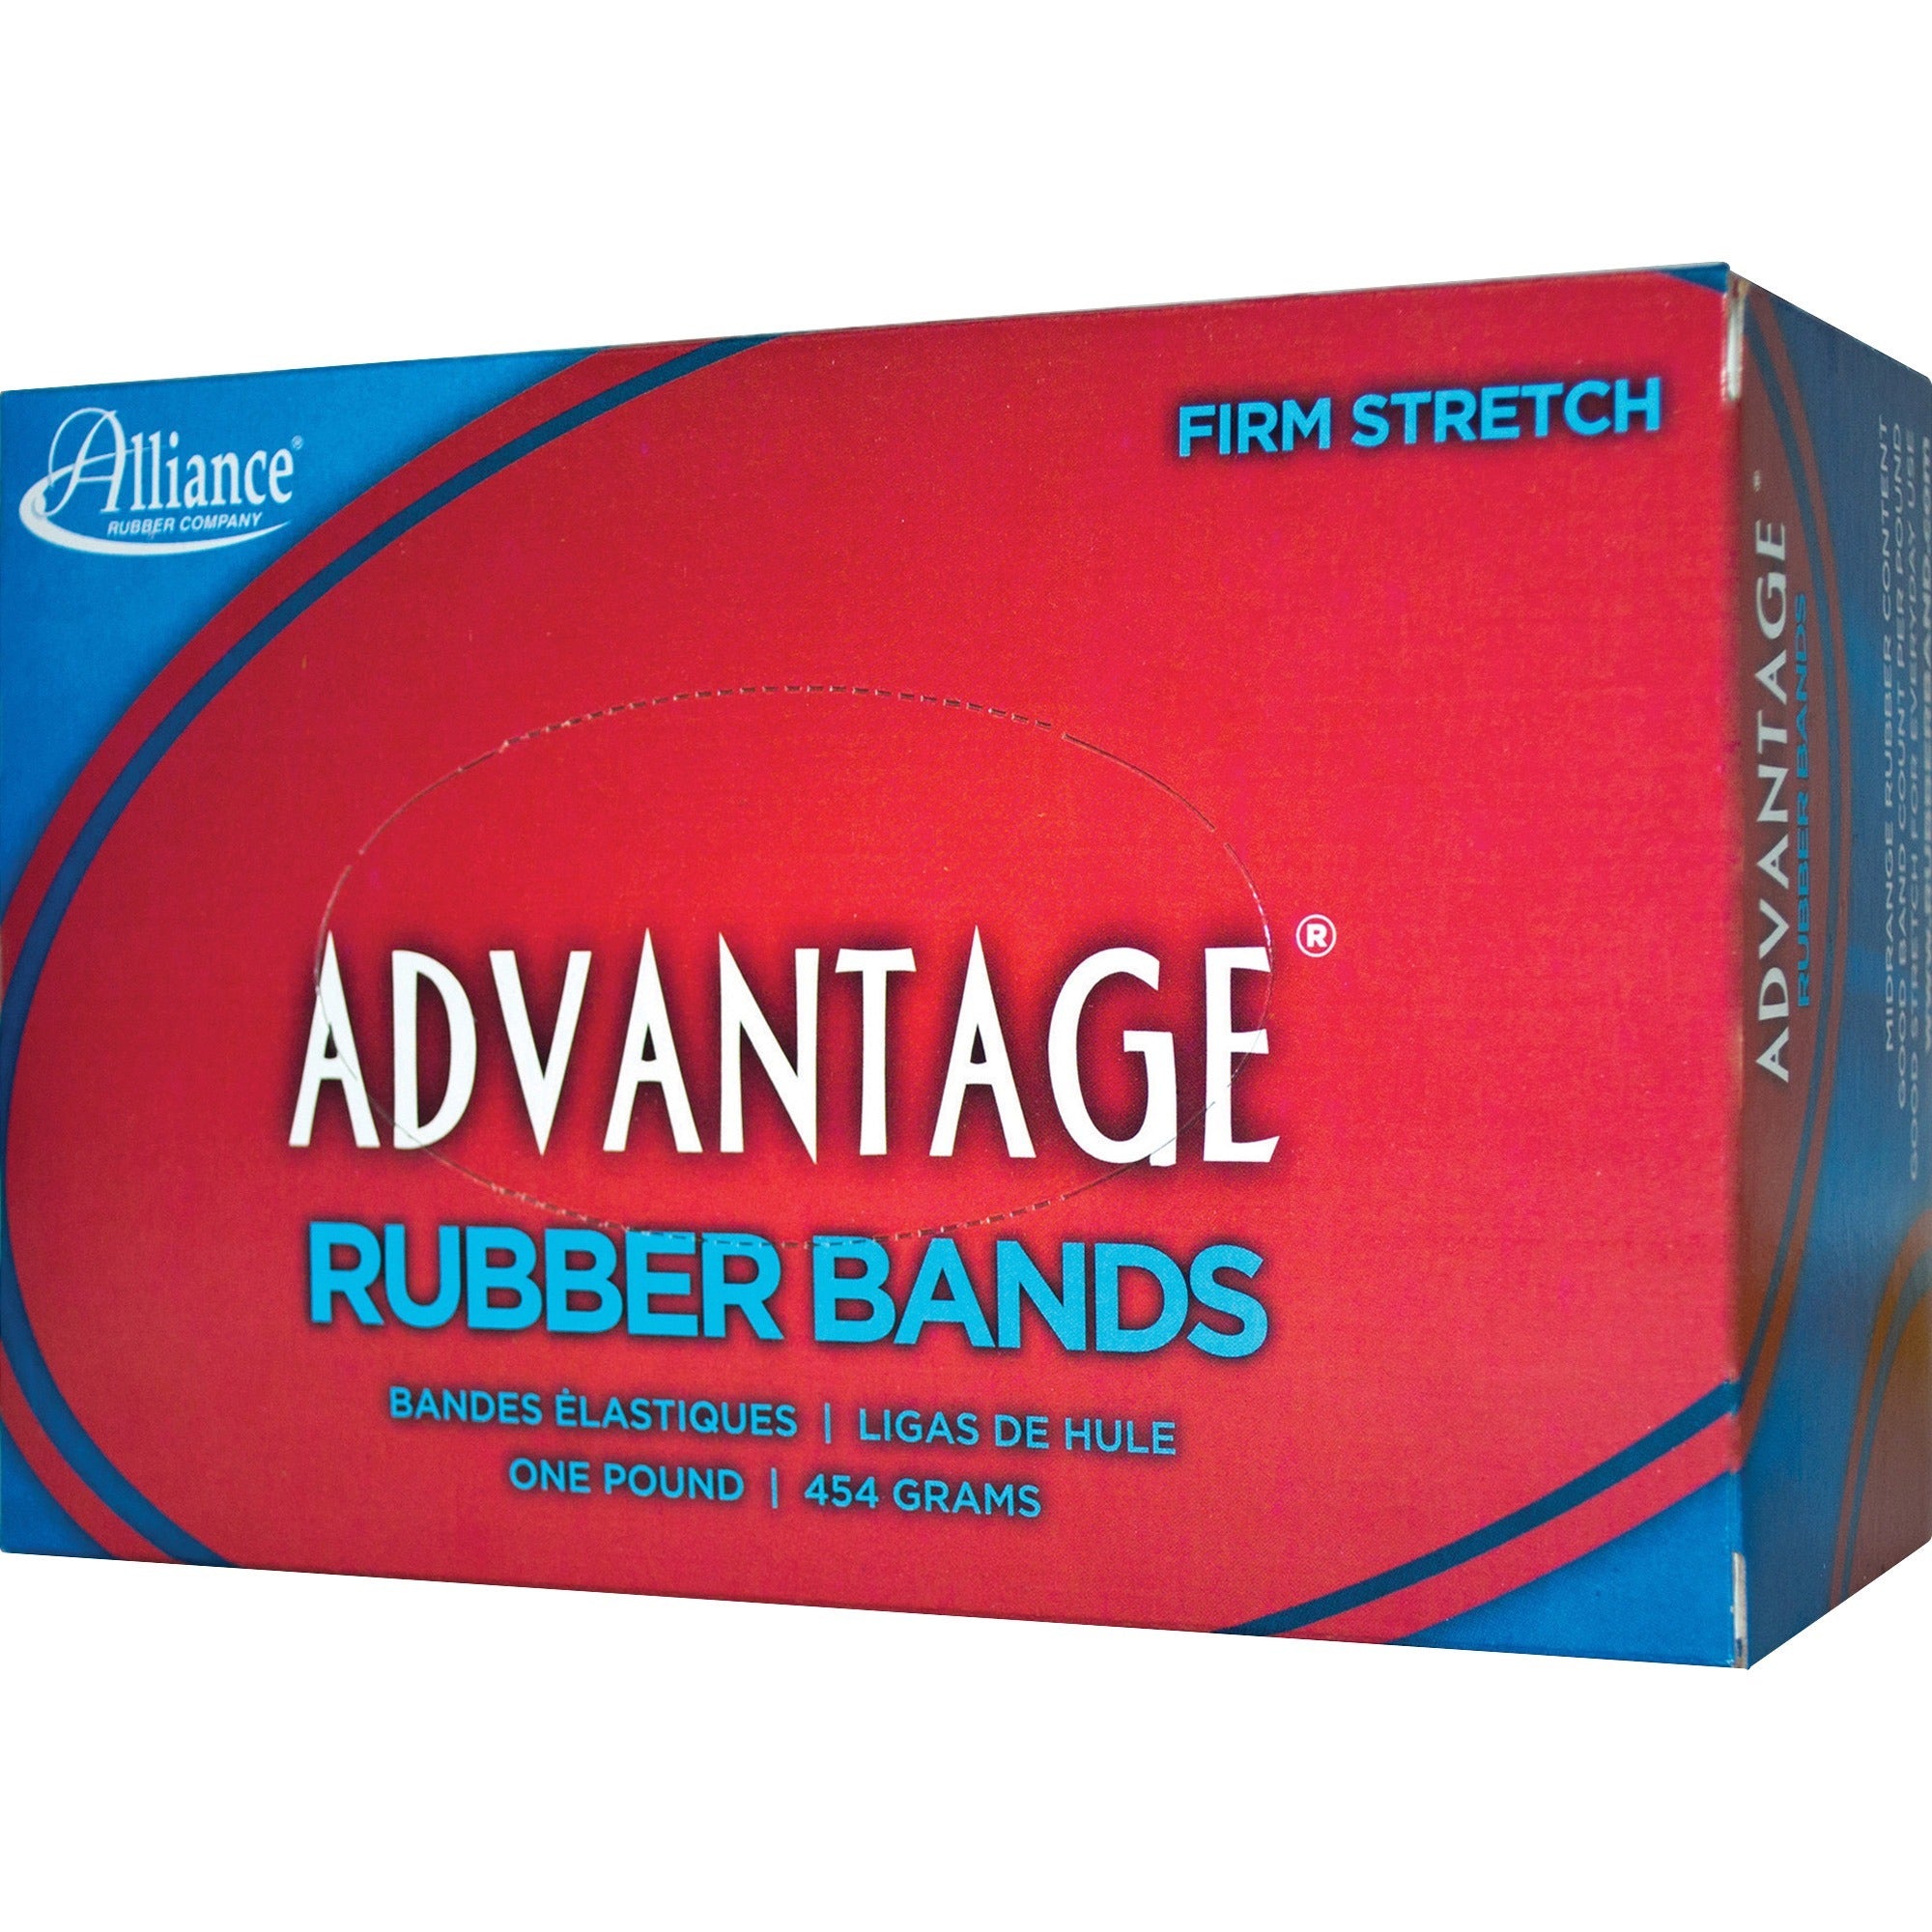 Alliance Rubber 26325 Advantage Rubber Bands - Size #32 - Approx. 700 Bands - 3" x 1/8" - Natural Crepe - 1 lb Box - 